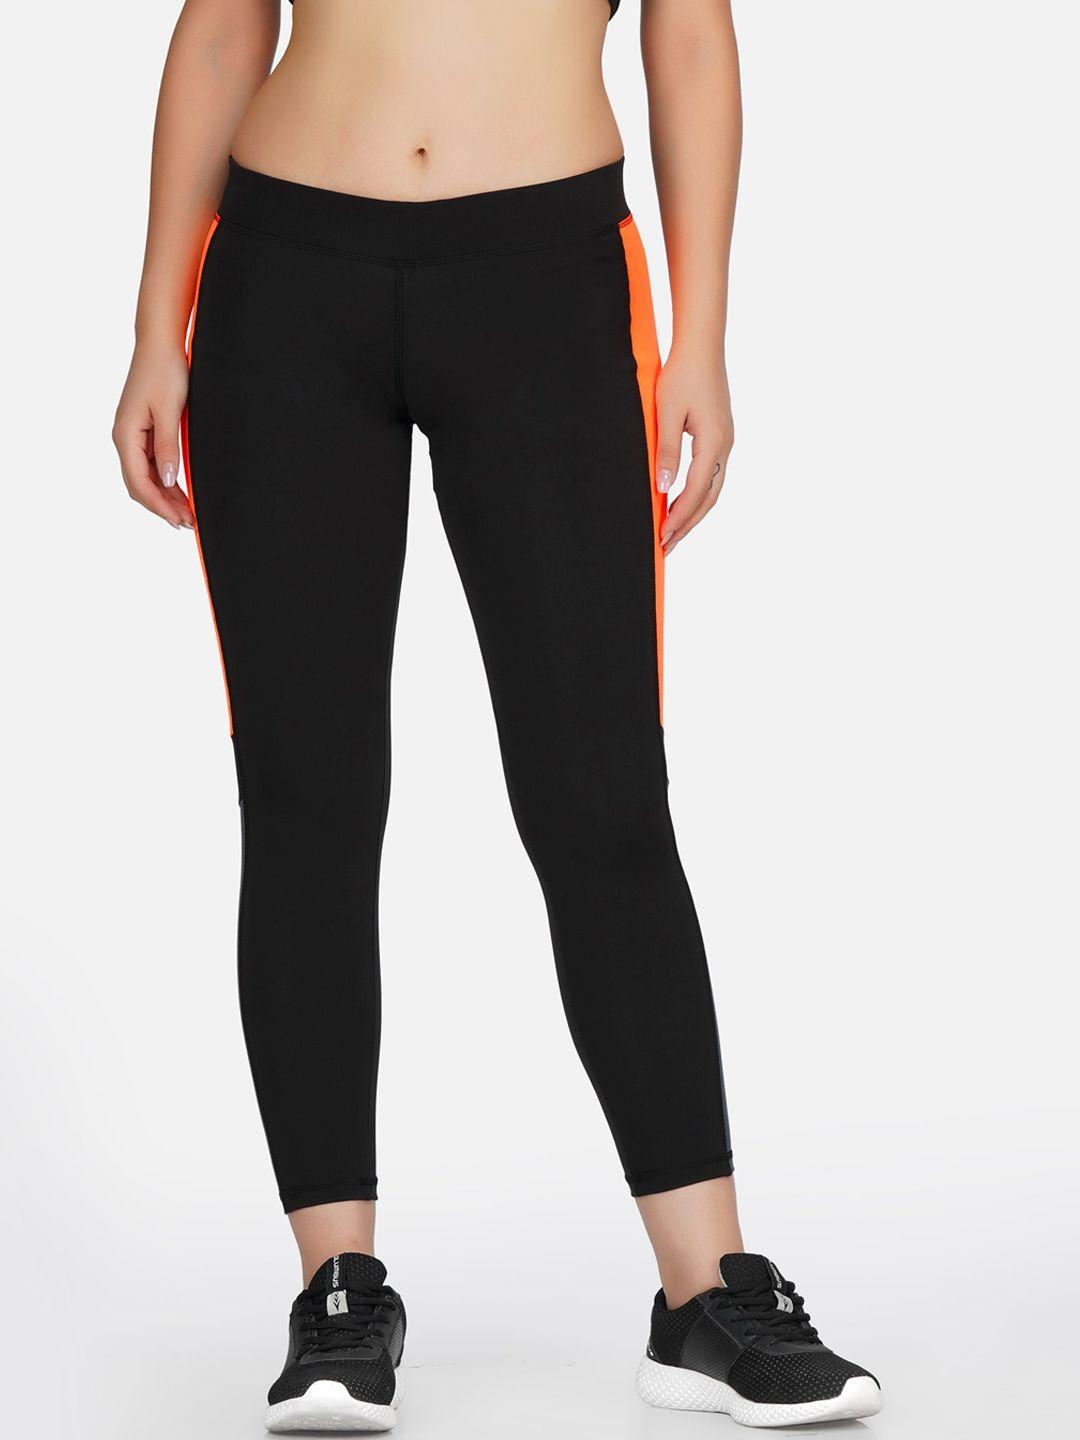 neu look fashion women black & orange colourblocked gym tights